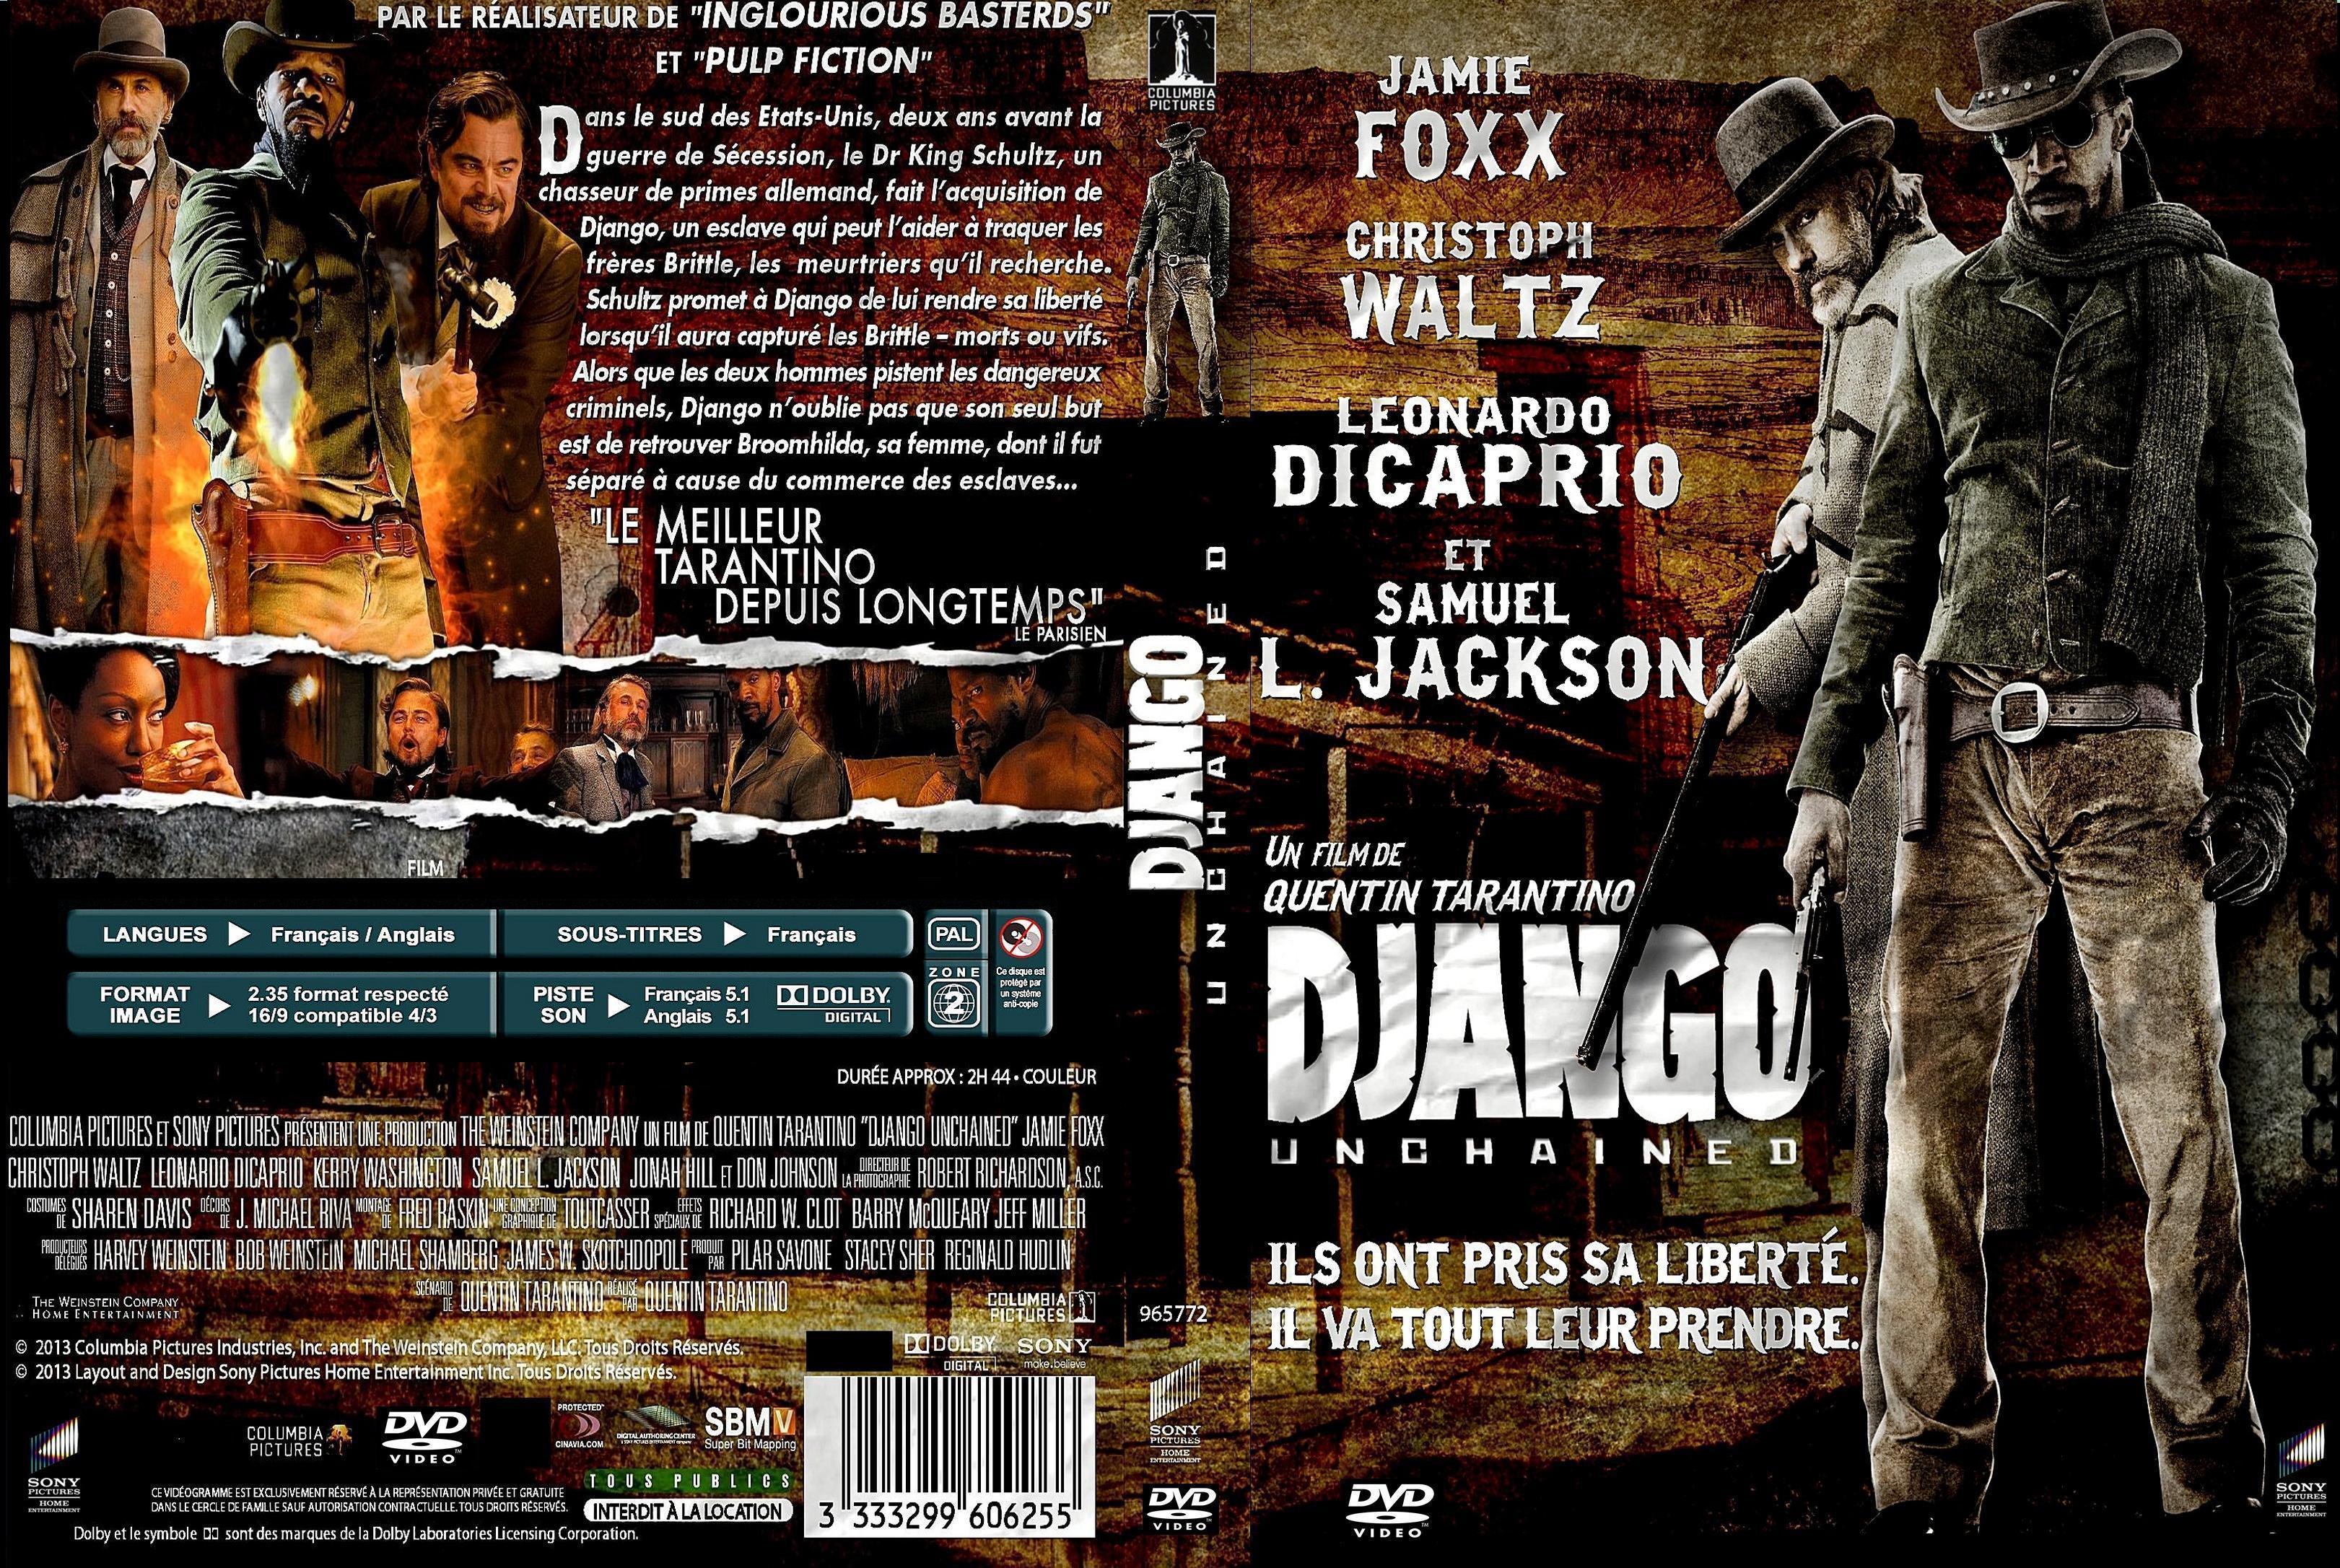 Jaquette DVD Django unchained custom v4